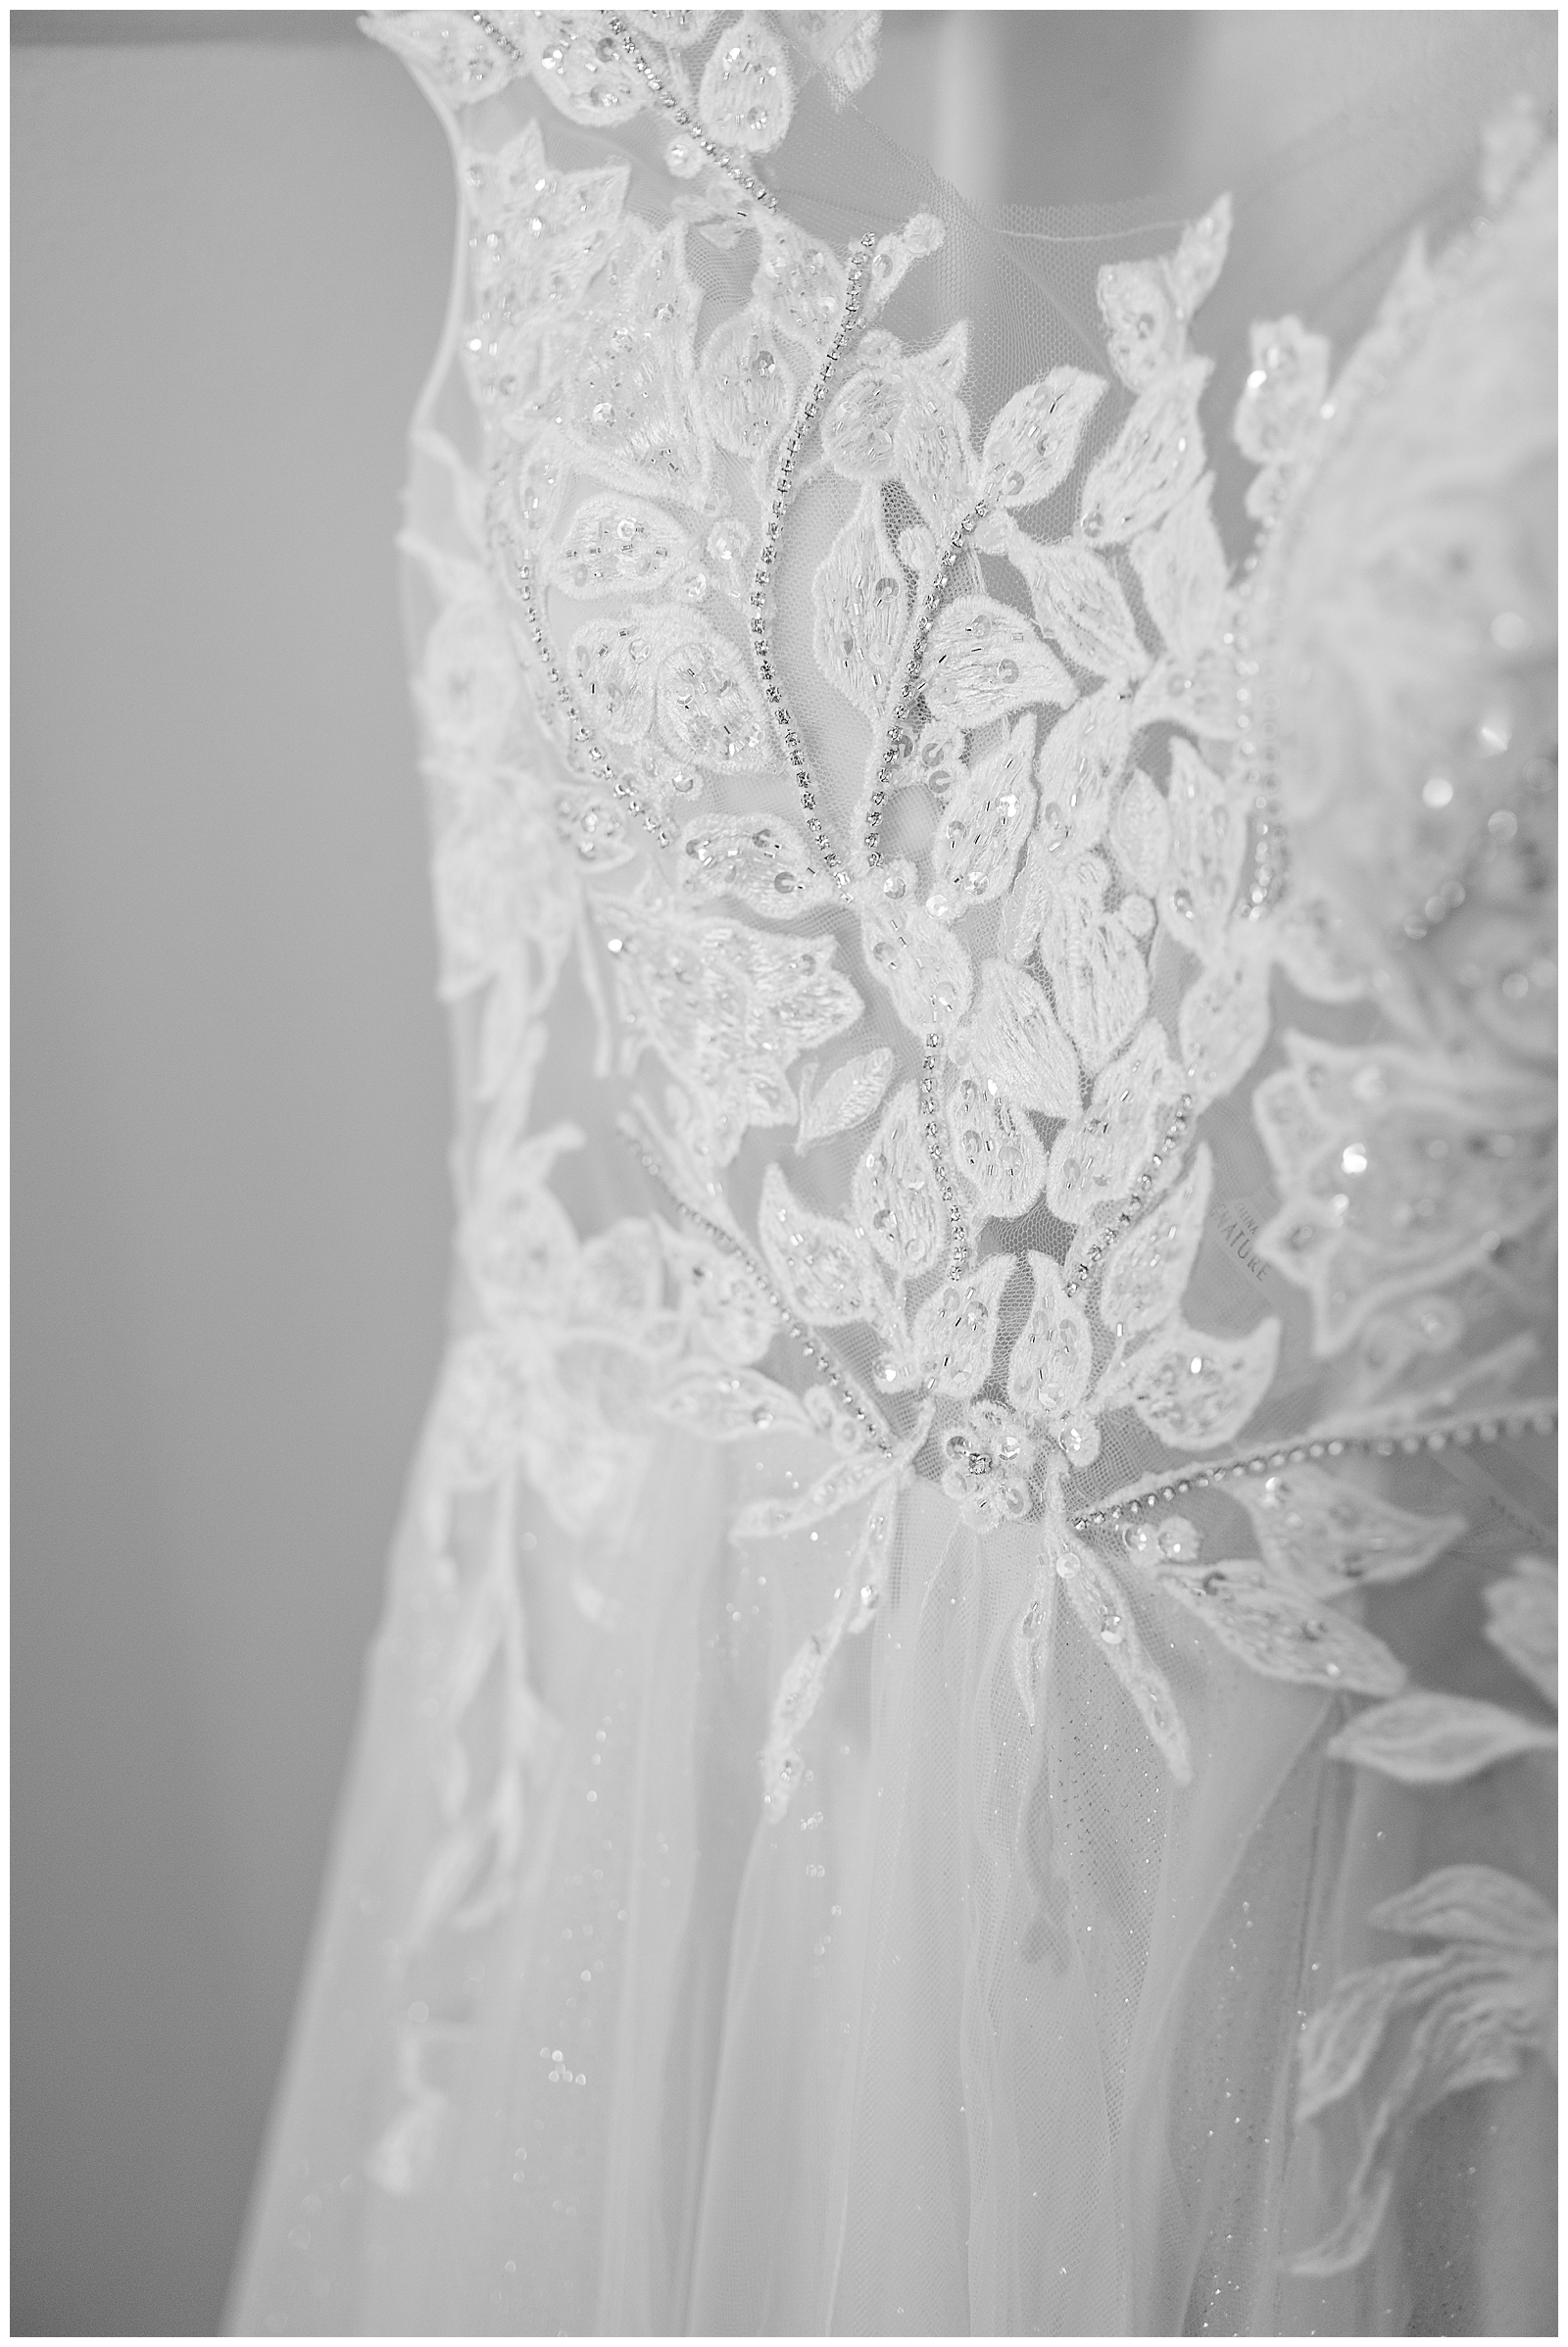 Black and White image of wedding dress. 